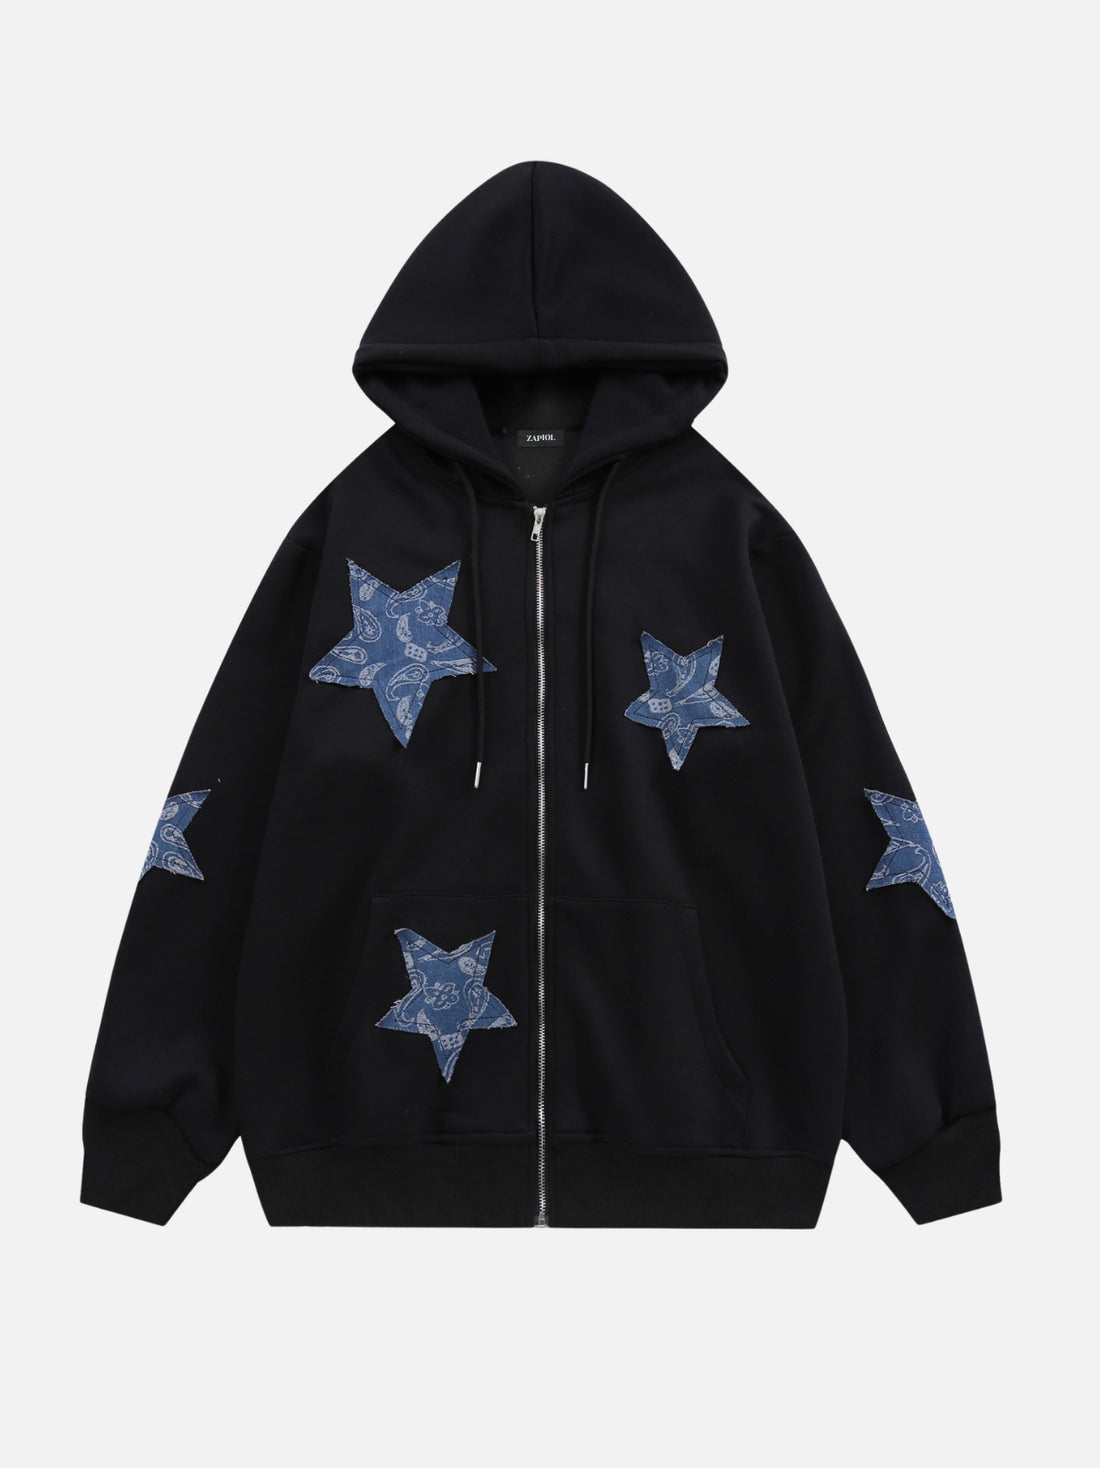 STARIUM - Graphic Sewn Zip Up Hoodie Black | Teenwear.eu